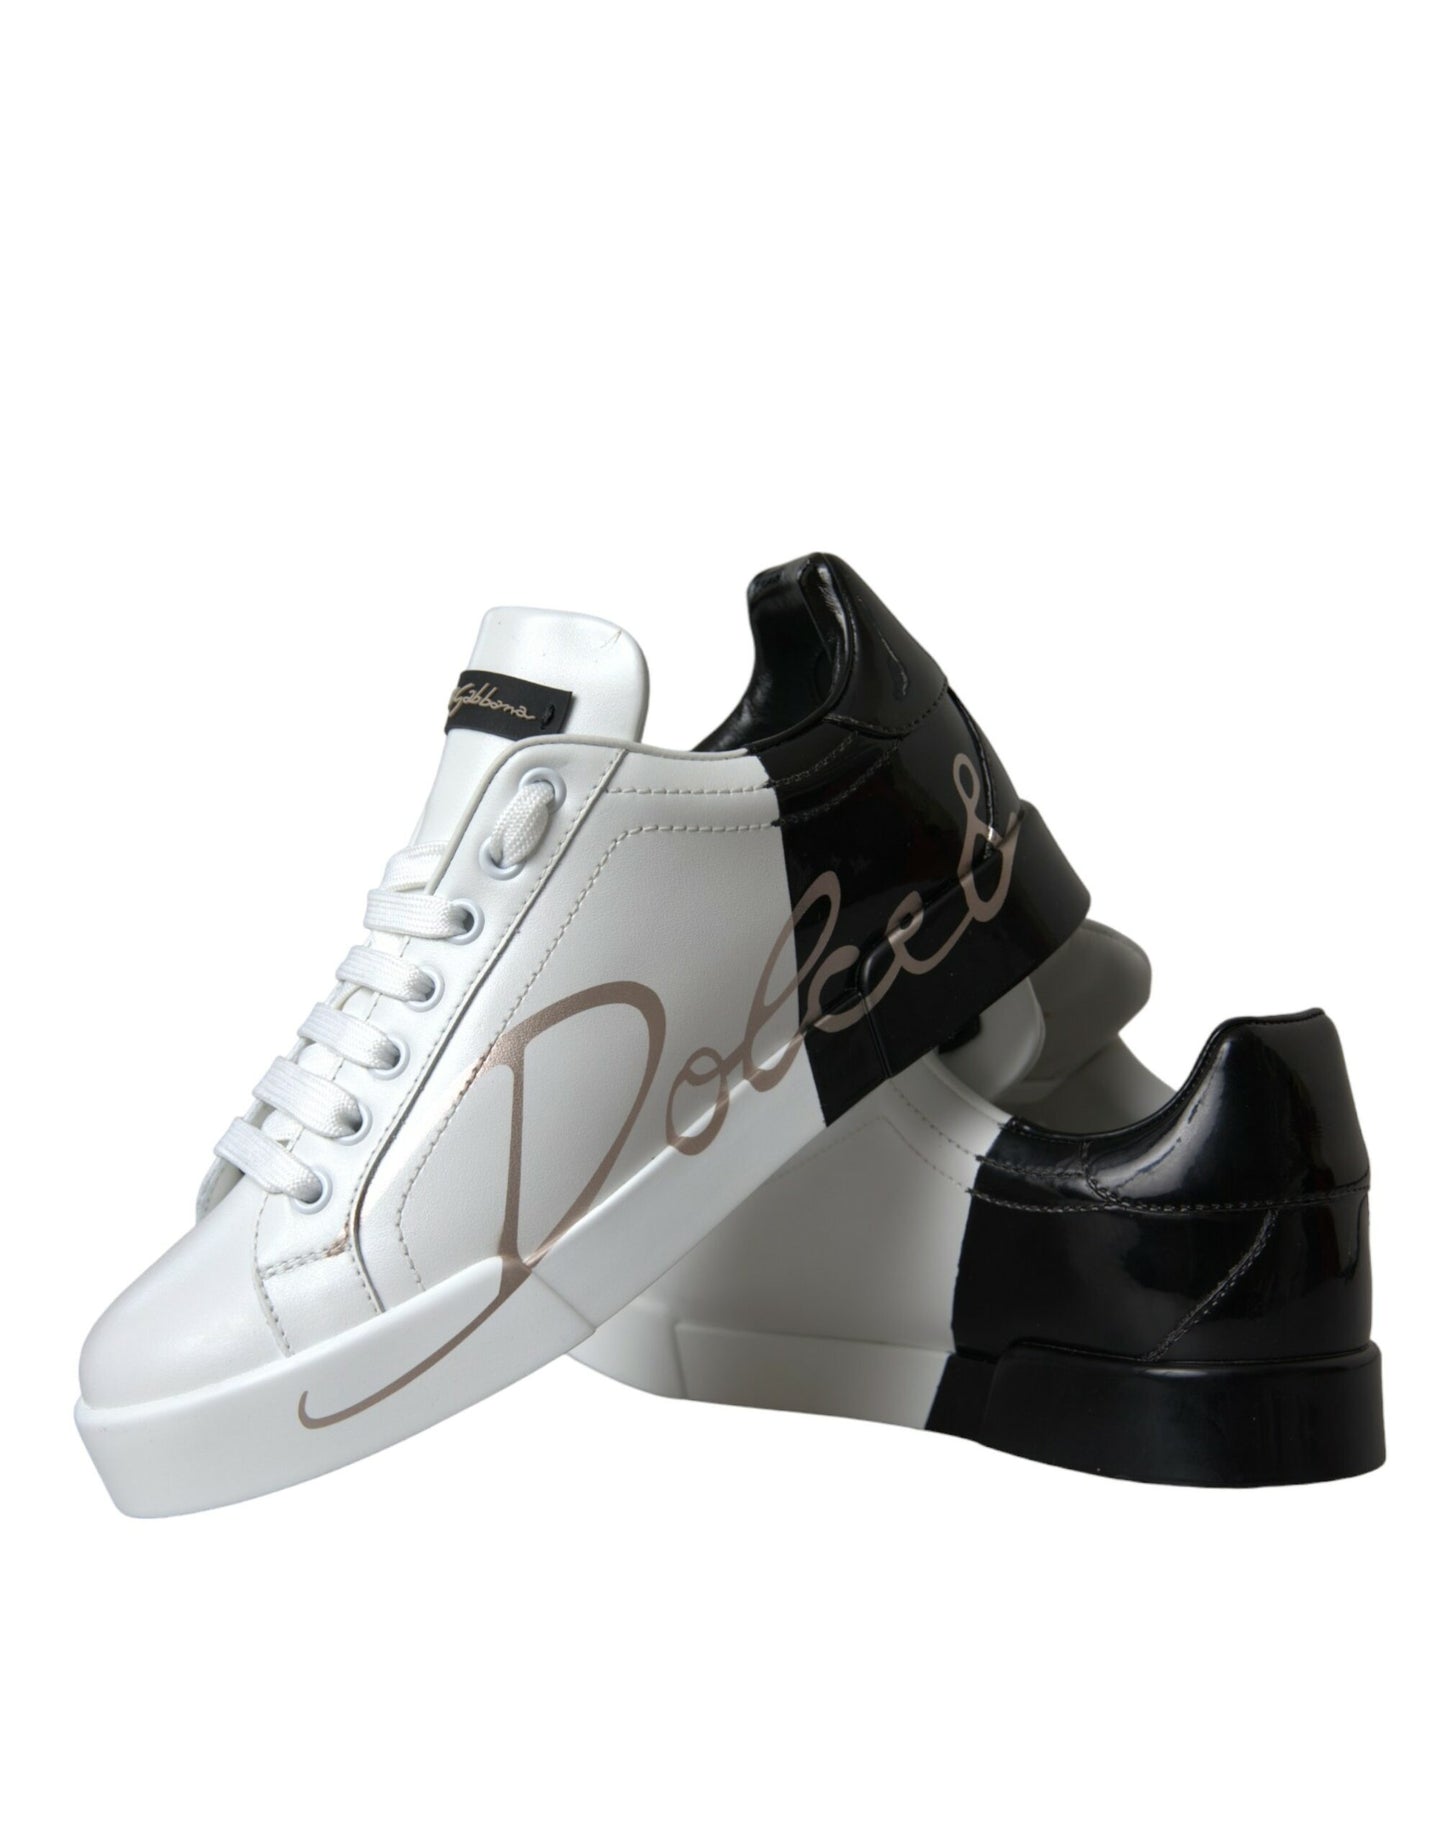 Dolce & Gabbana White Black Portofino Low Top Leather Sneakers Shoes